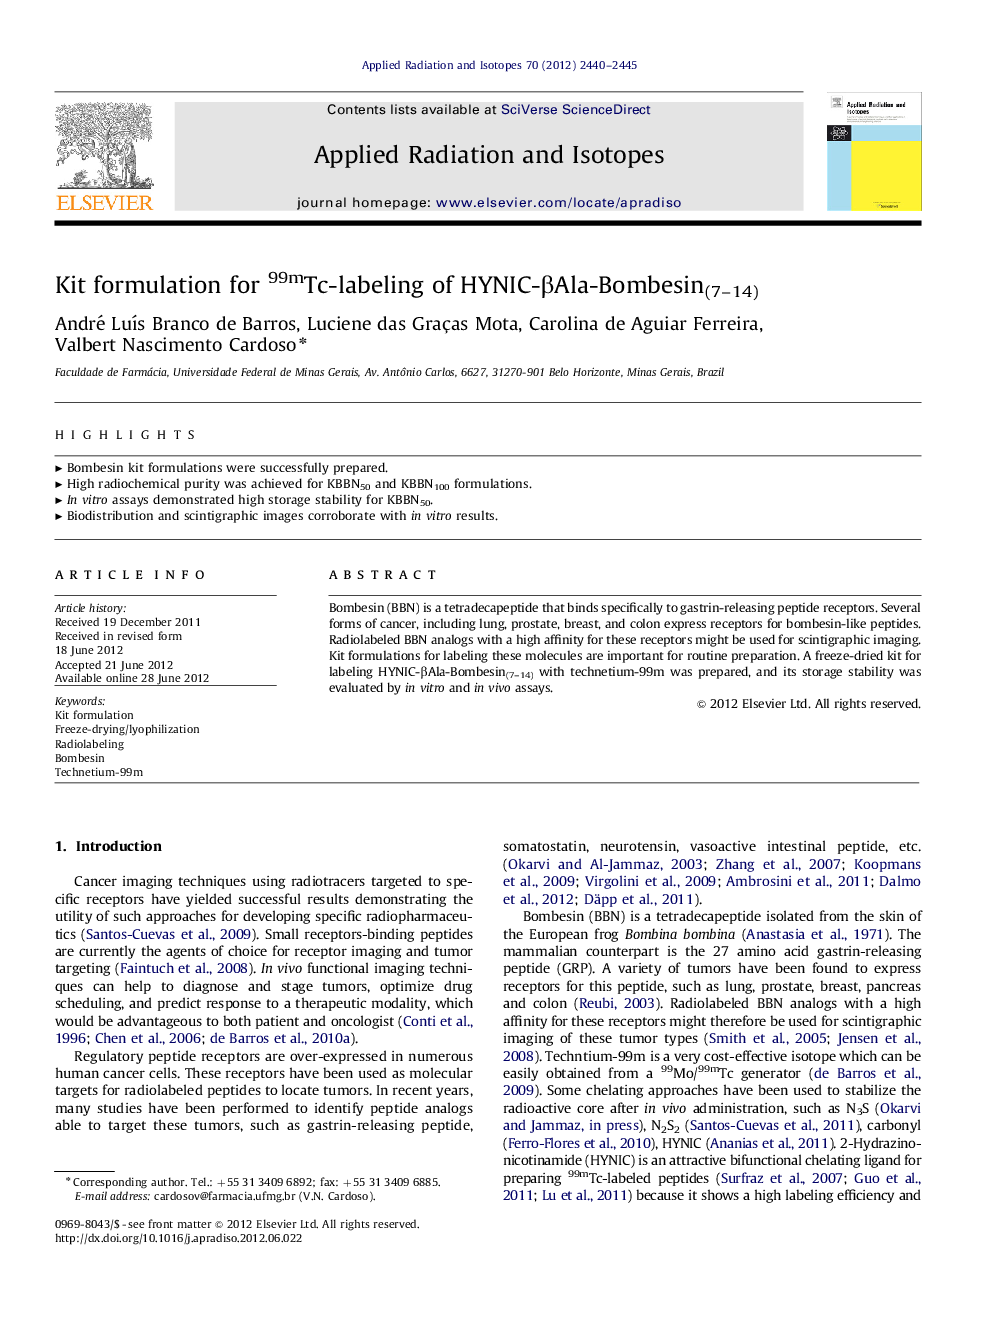 Kit formulation for 99mTc-labeling of HYNIC-Î²Ala-Bombesin(7-14)